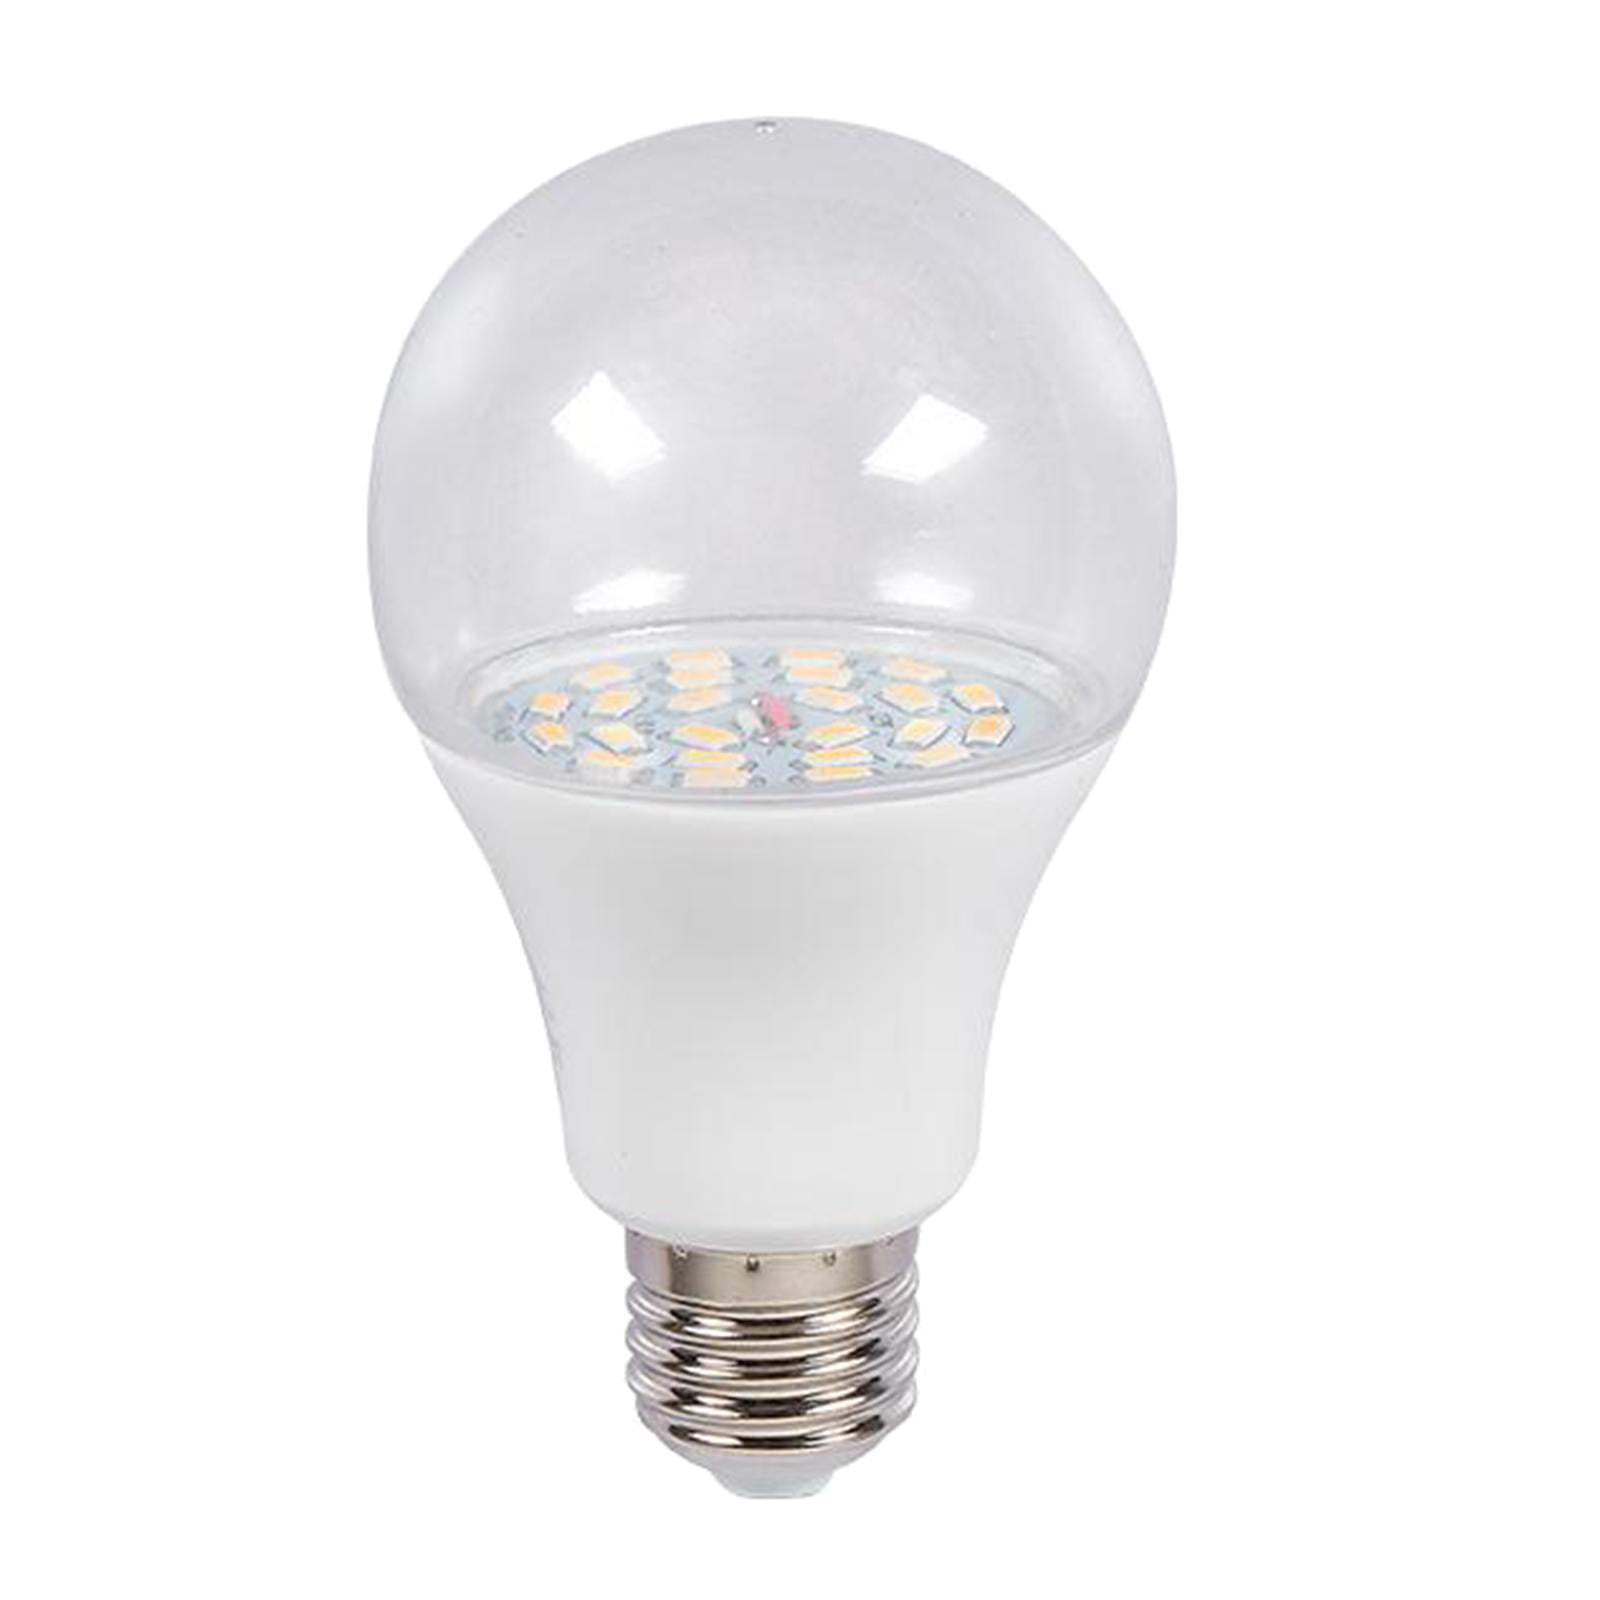 250W E27 LED Grow Light Bulb Sunlike Full Spectrum Indoor Hydroponic Plant 